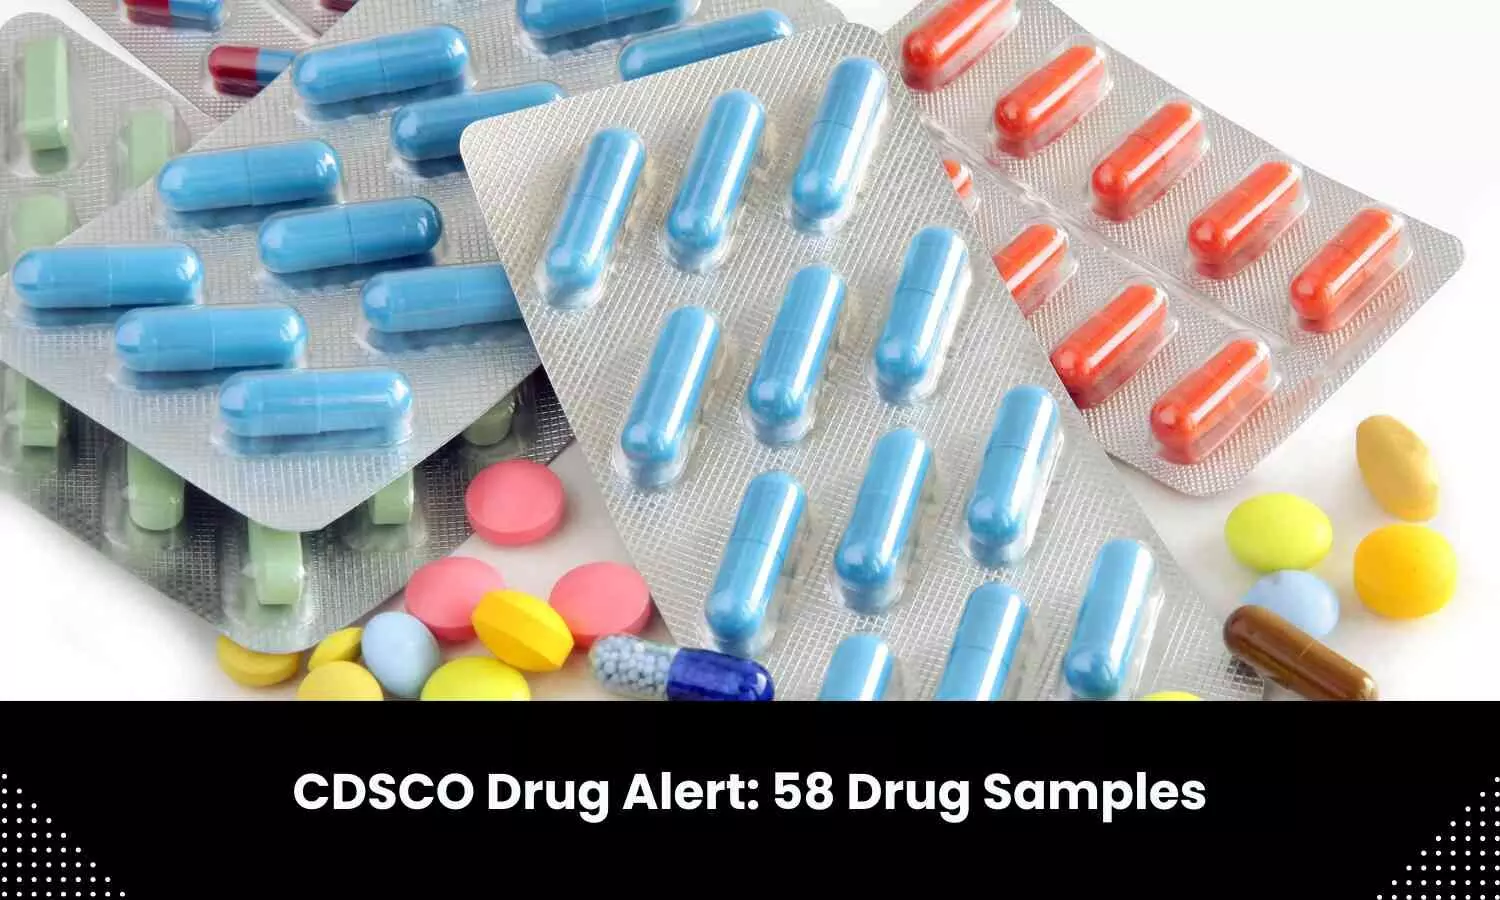 Drug safety alert: CDSCO flags 58 drug samples